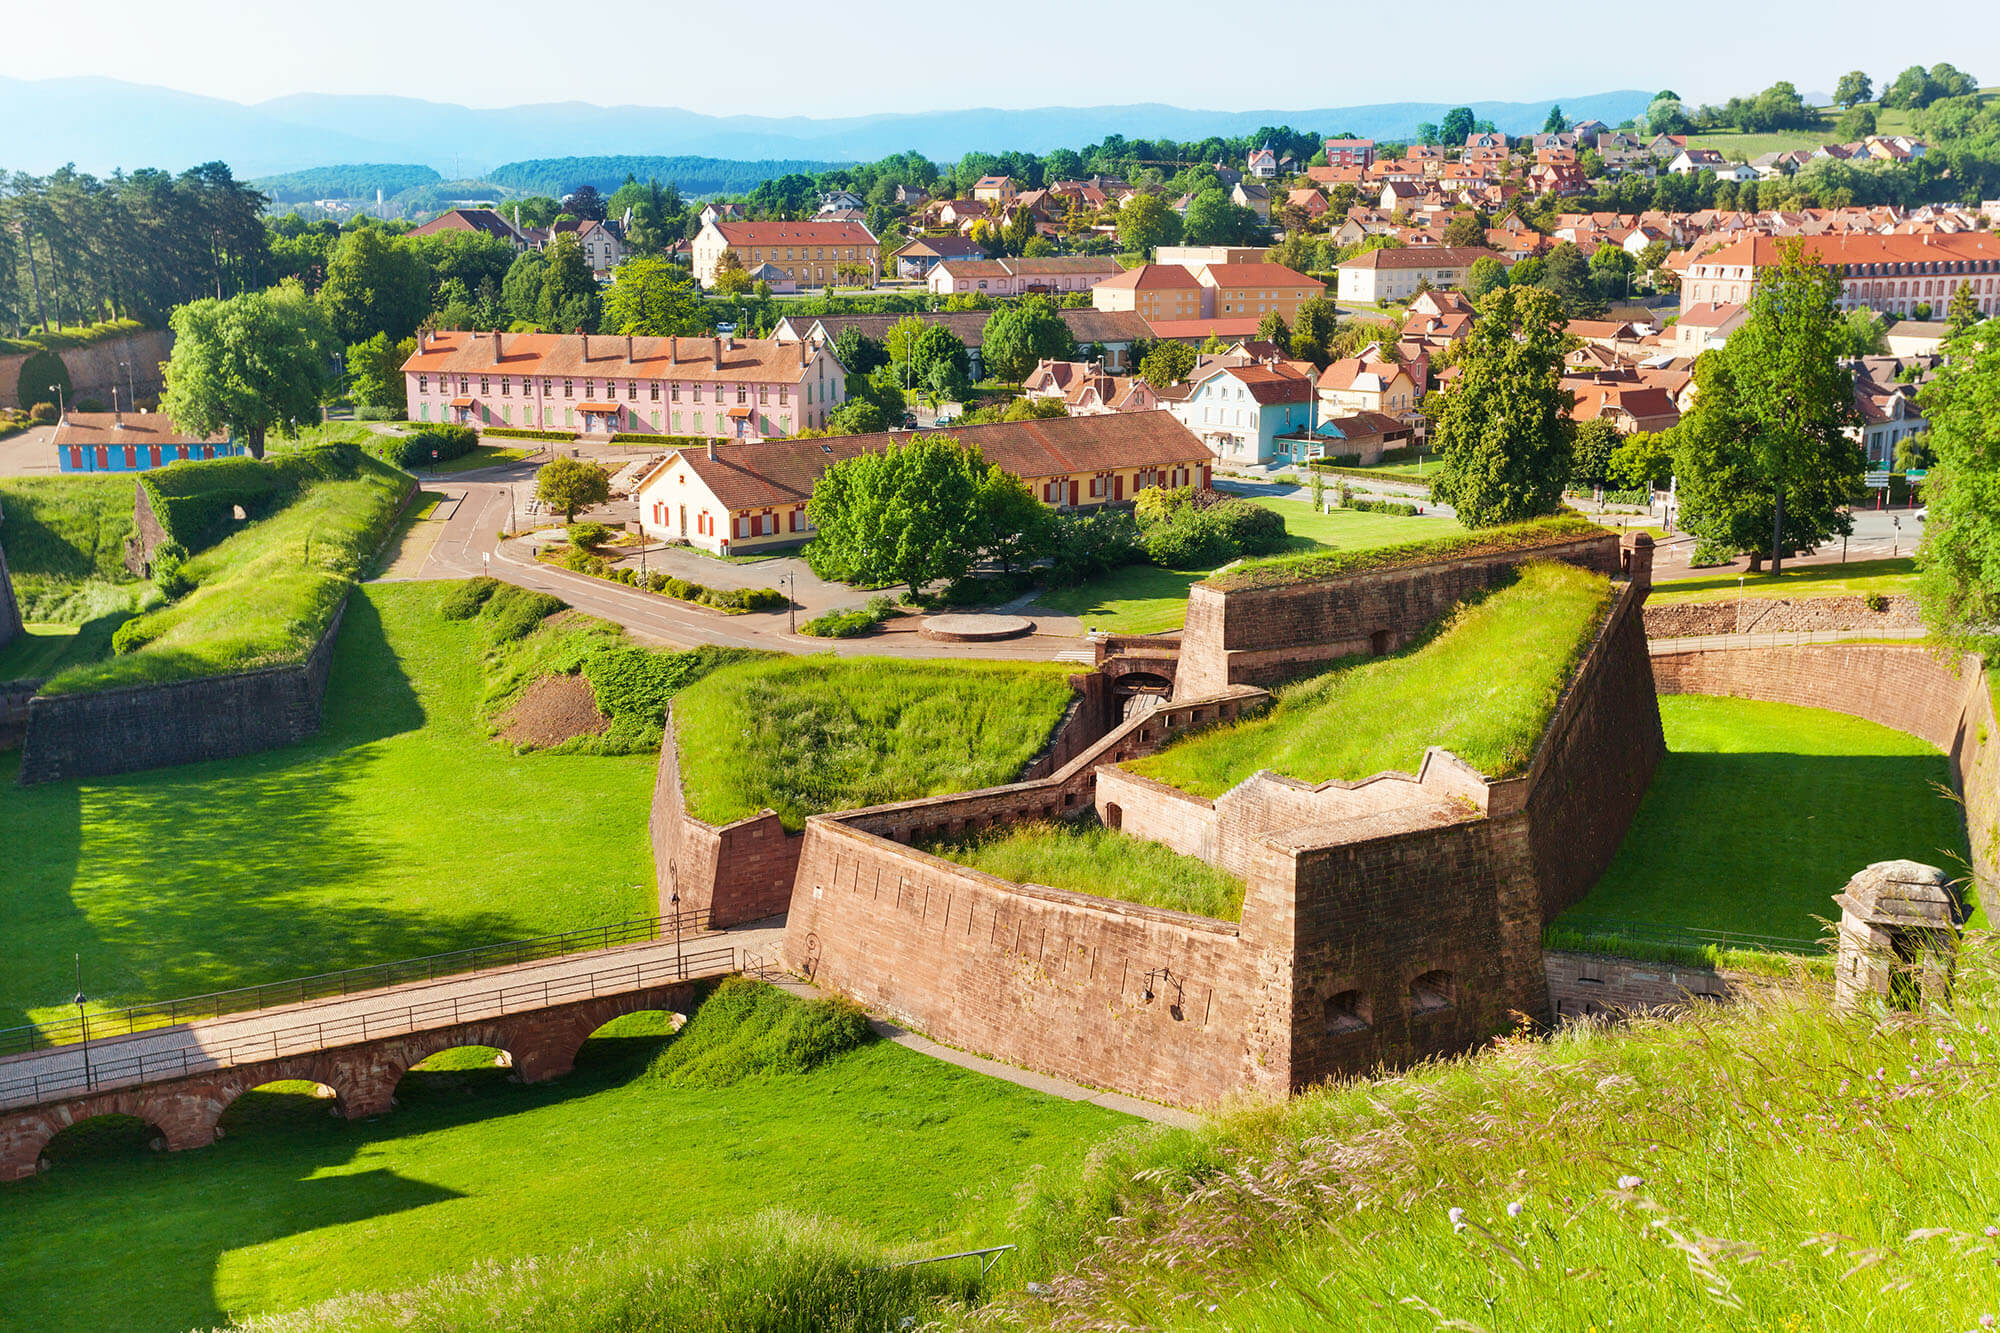 La citadelle de Belfort, recouverte de verdure ©Guide du Routard